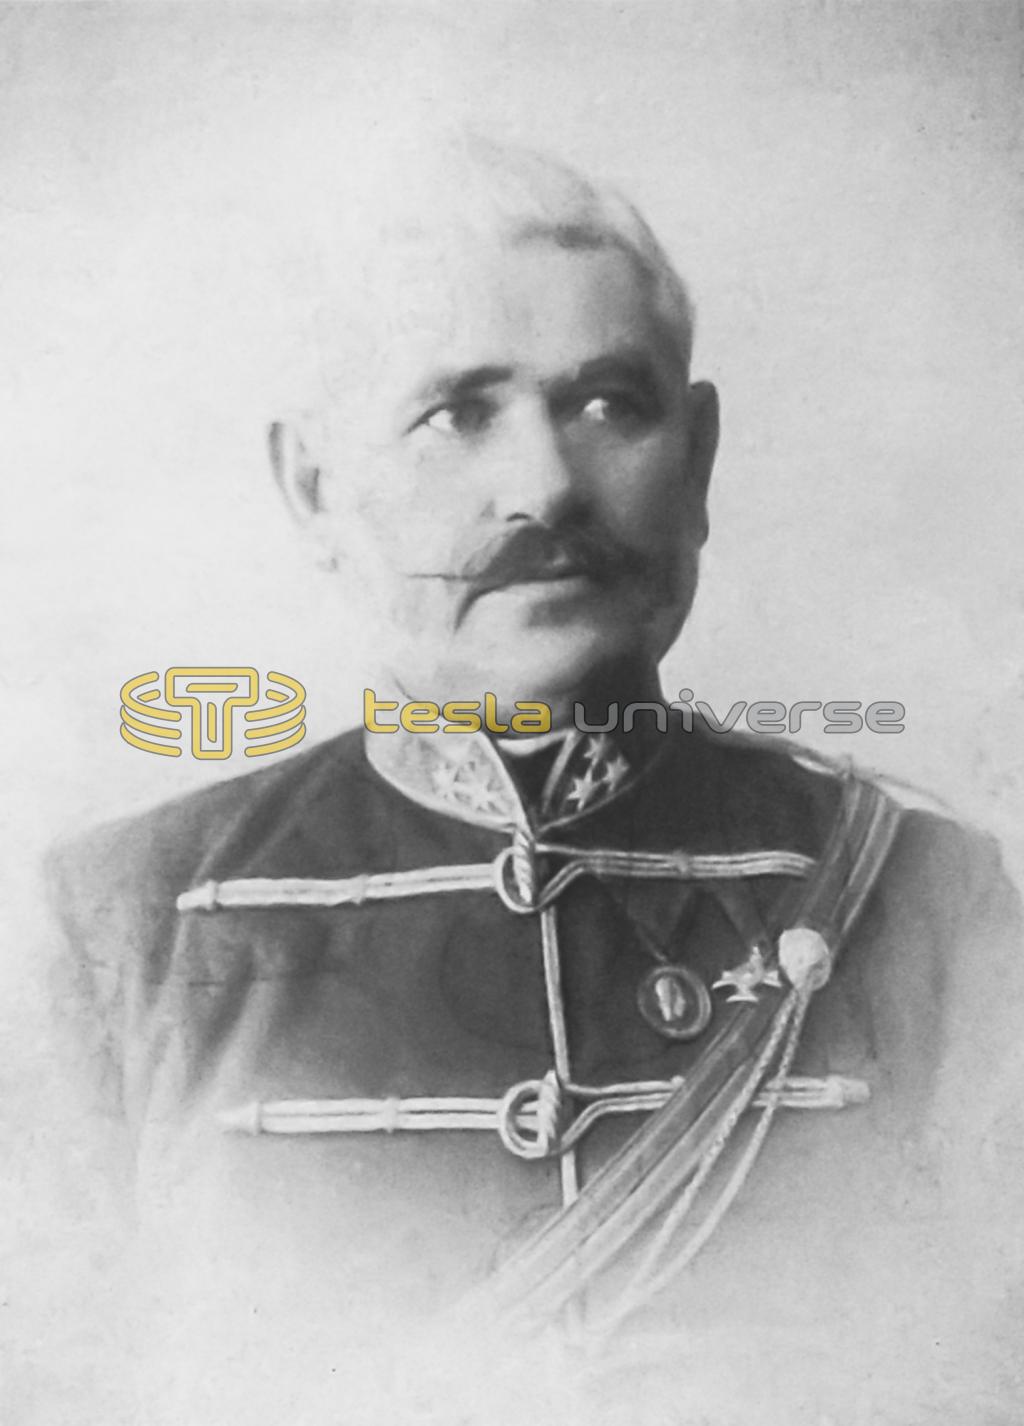 Pajo Mandic, brother of Nikola Tesla's mother